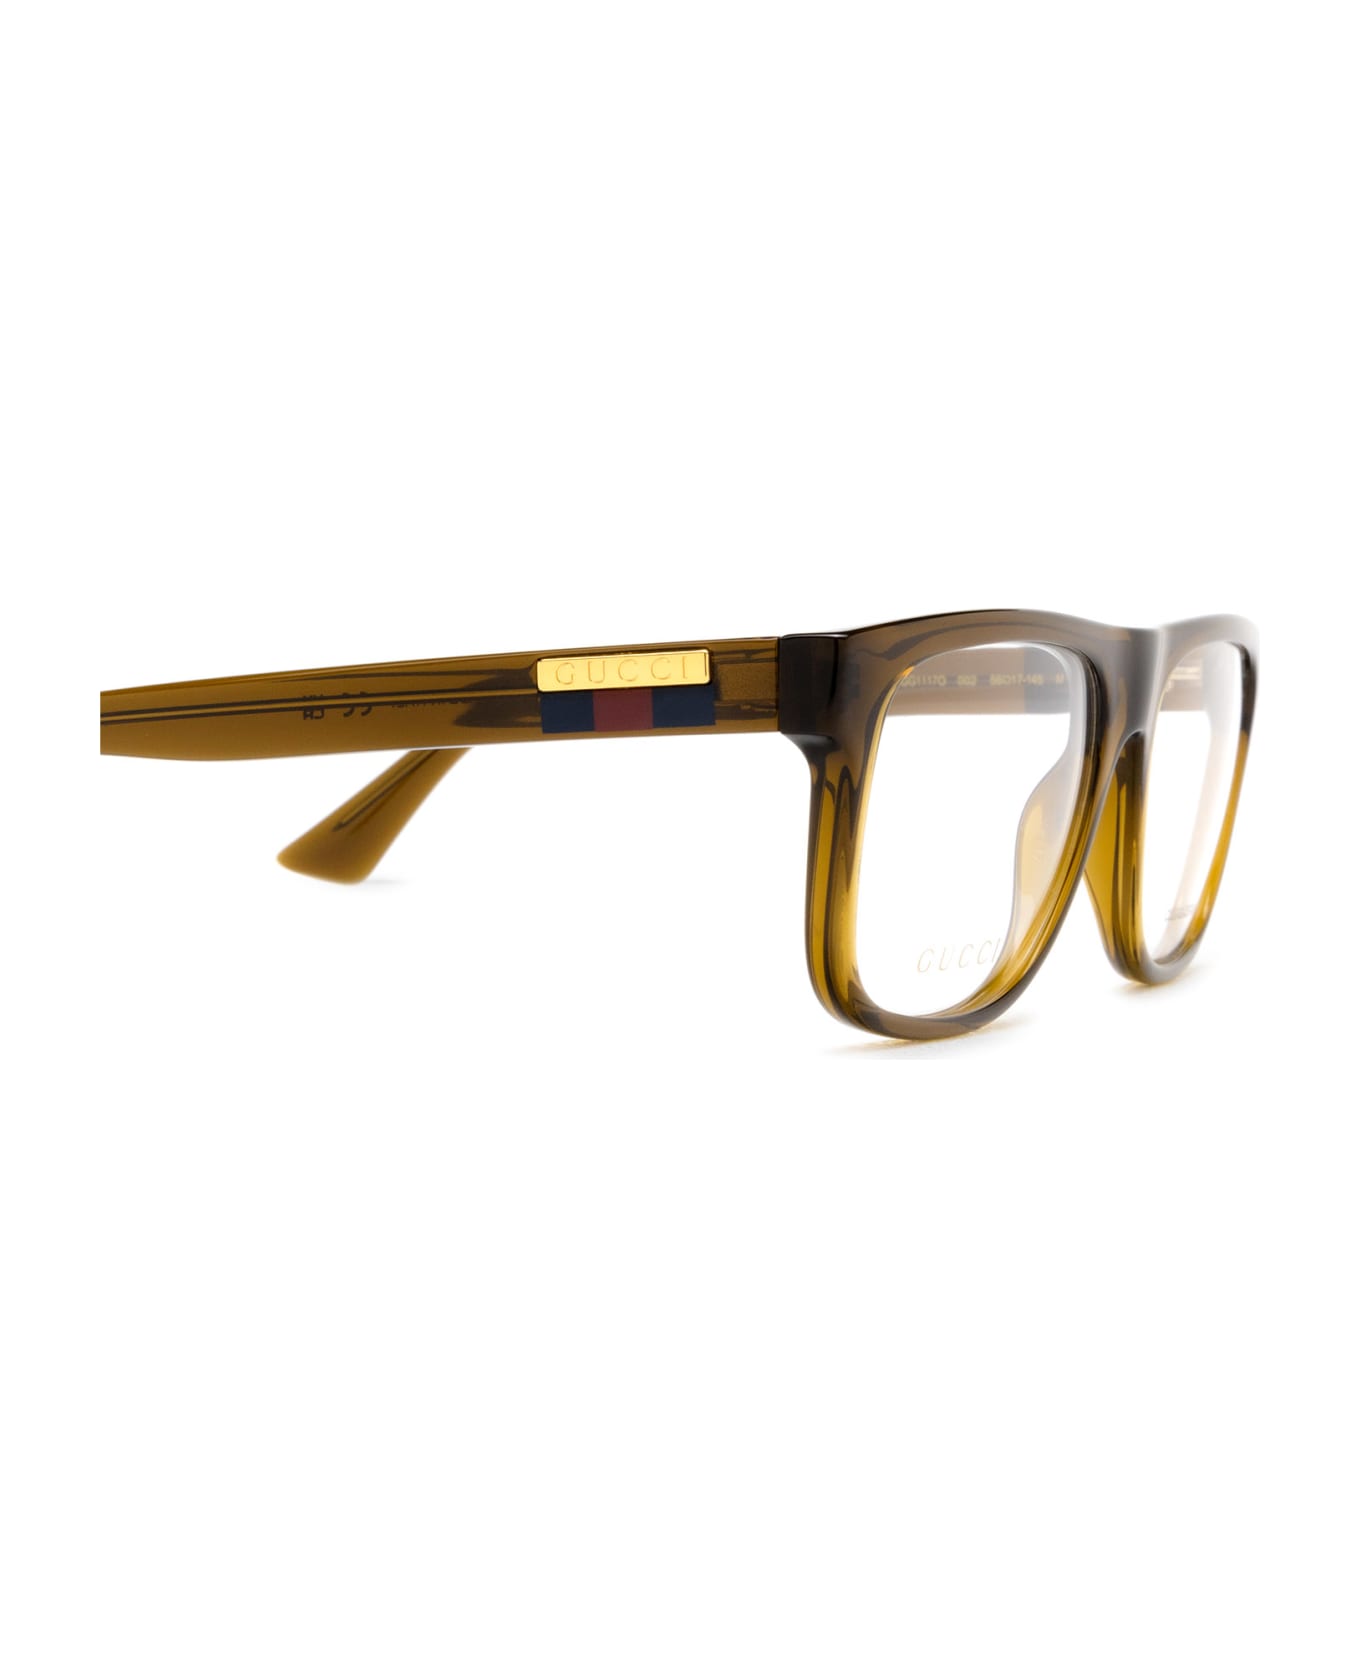 Gucci Green Eyewear Gg1117o Transparent Brown Glasses - Transparent Brown